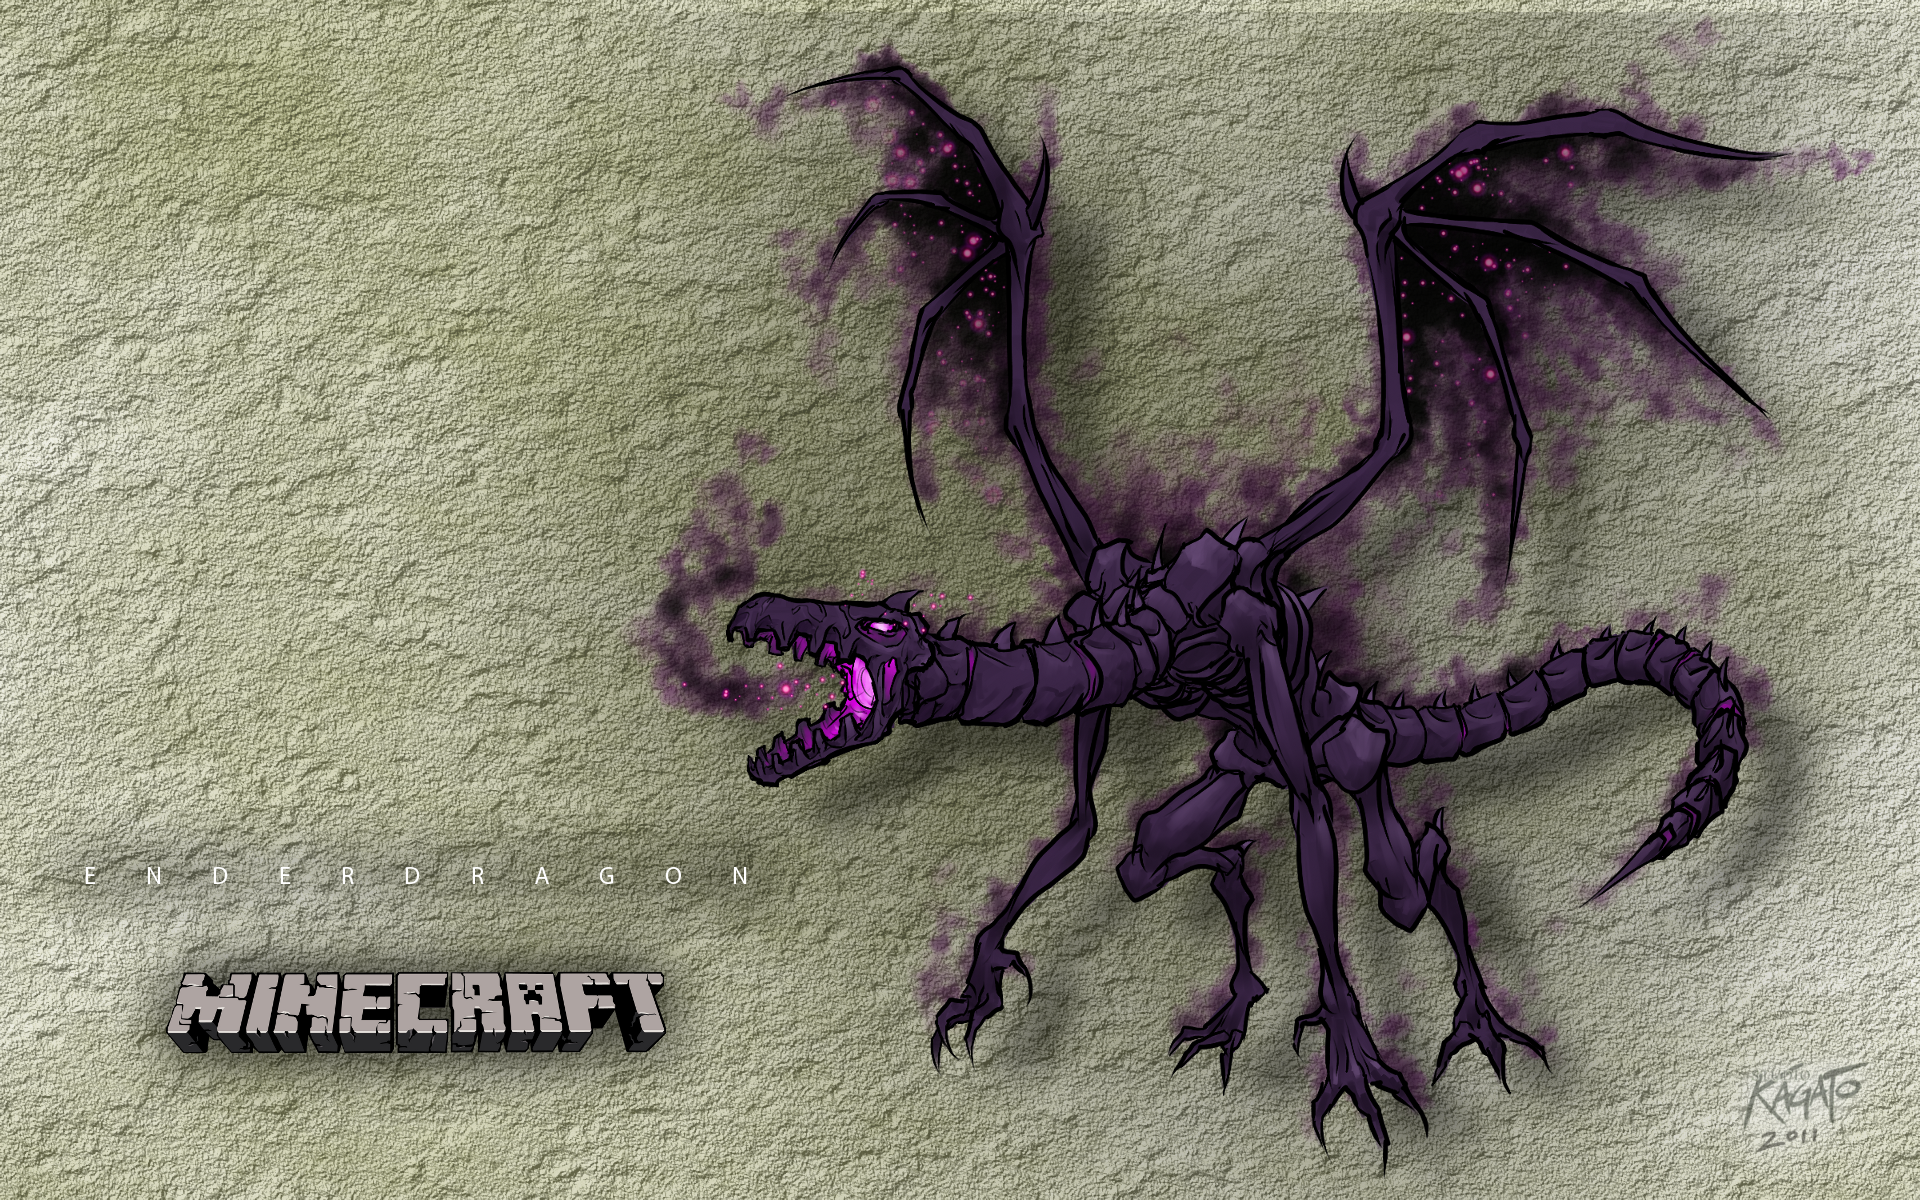 Minecraft Mutant Ender Dragon Wallpaper Www  Illustration  Full Size PNG  Download  SeekPNG